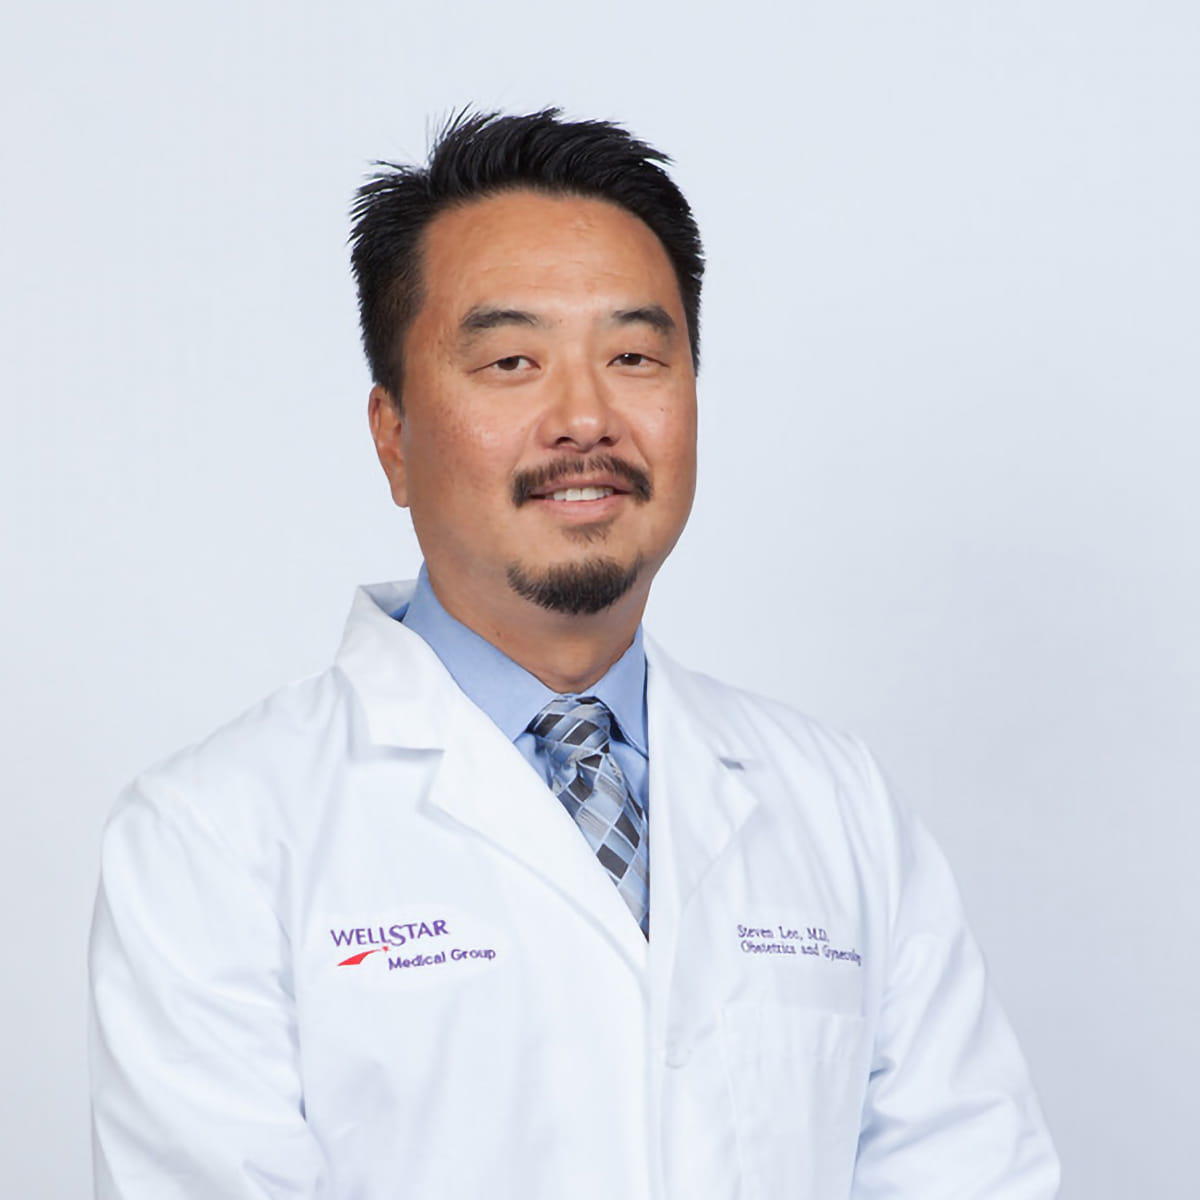 Dr. Steven Hoon Lee